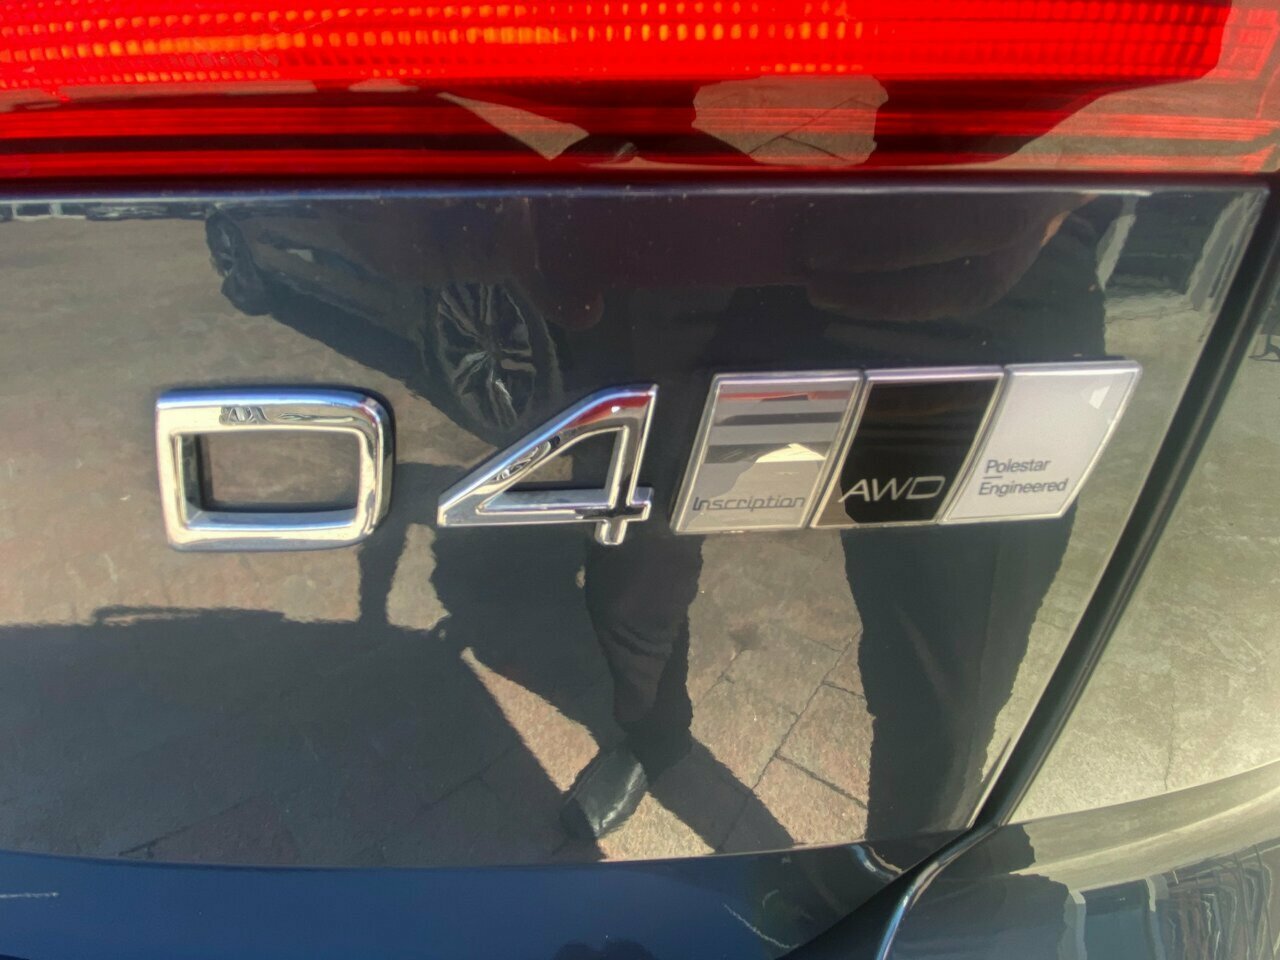 2019 MY20 Volvo XC60 246 MY20 D4 Inscription (AWD) SUV Image 22